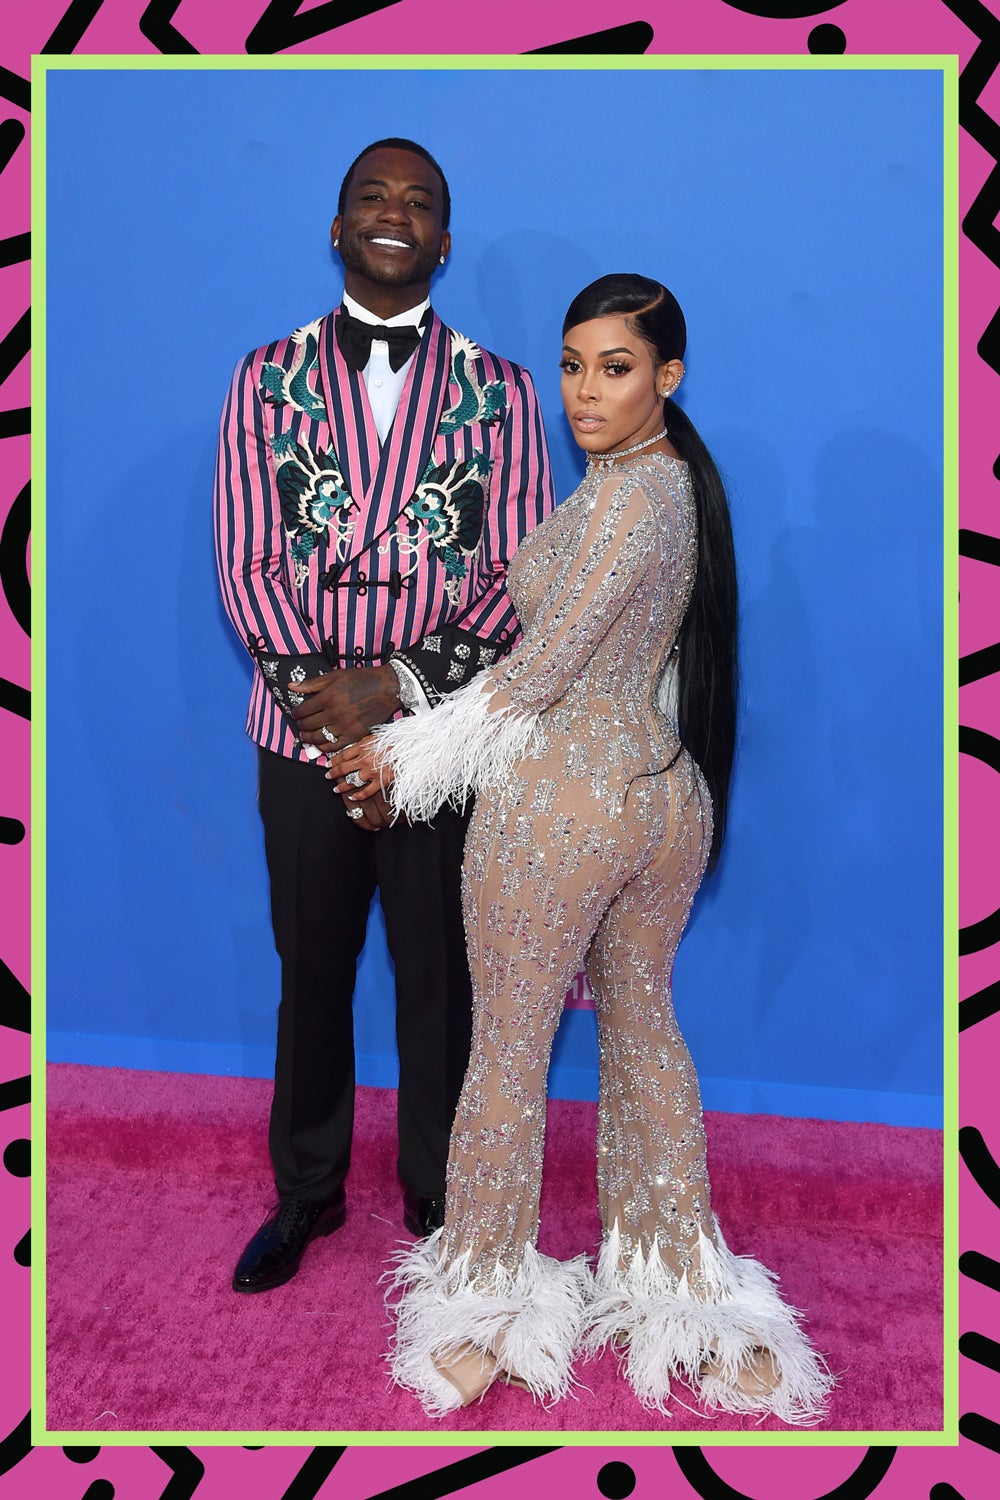 Gucci Mane And Keyshia Ka’Oir Serve Consistency On The VMA’s Red Carpet